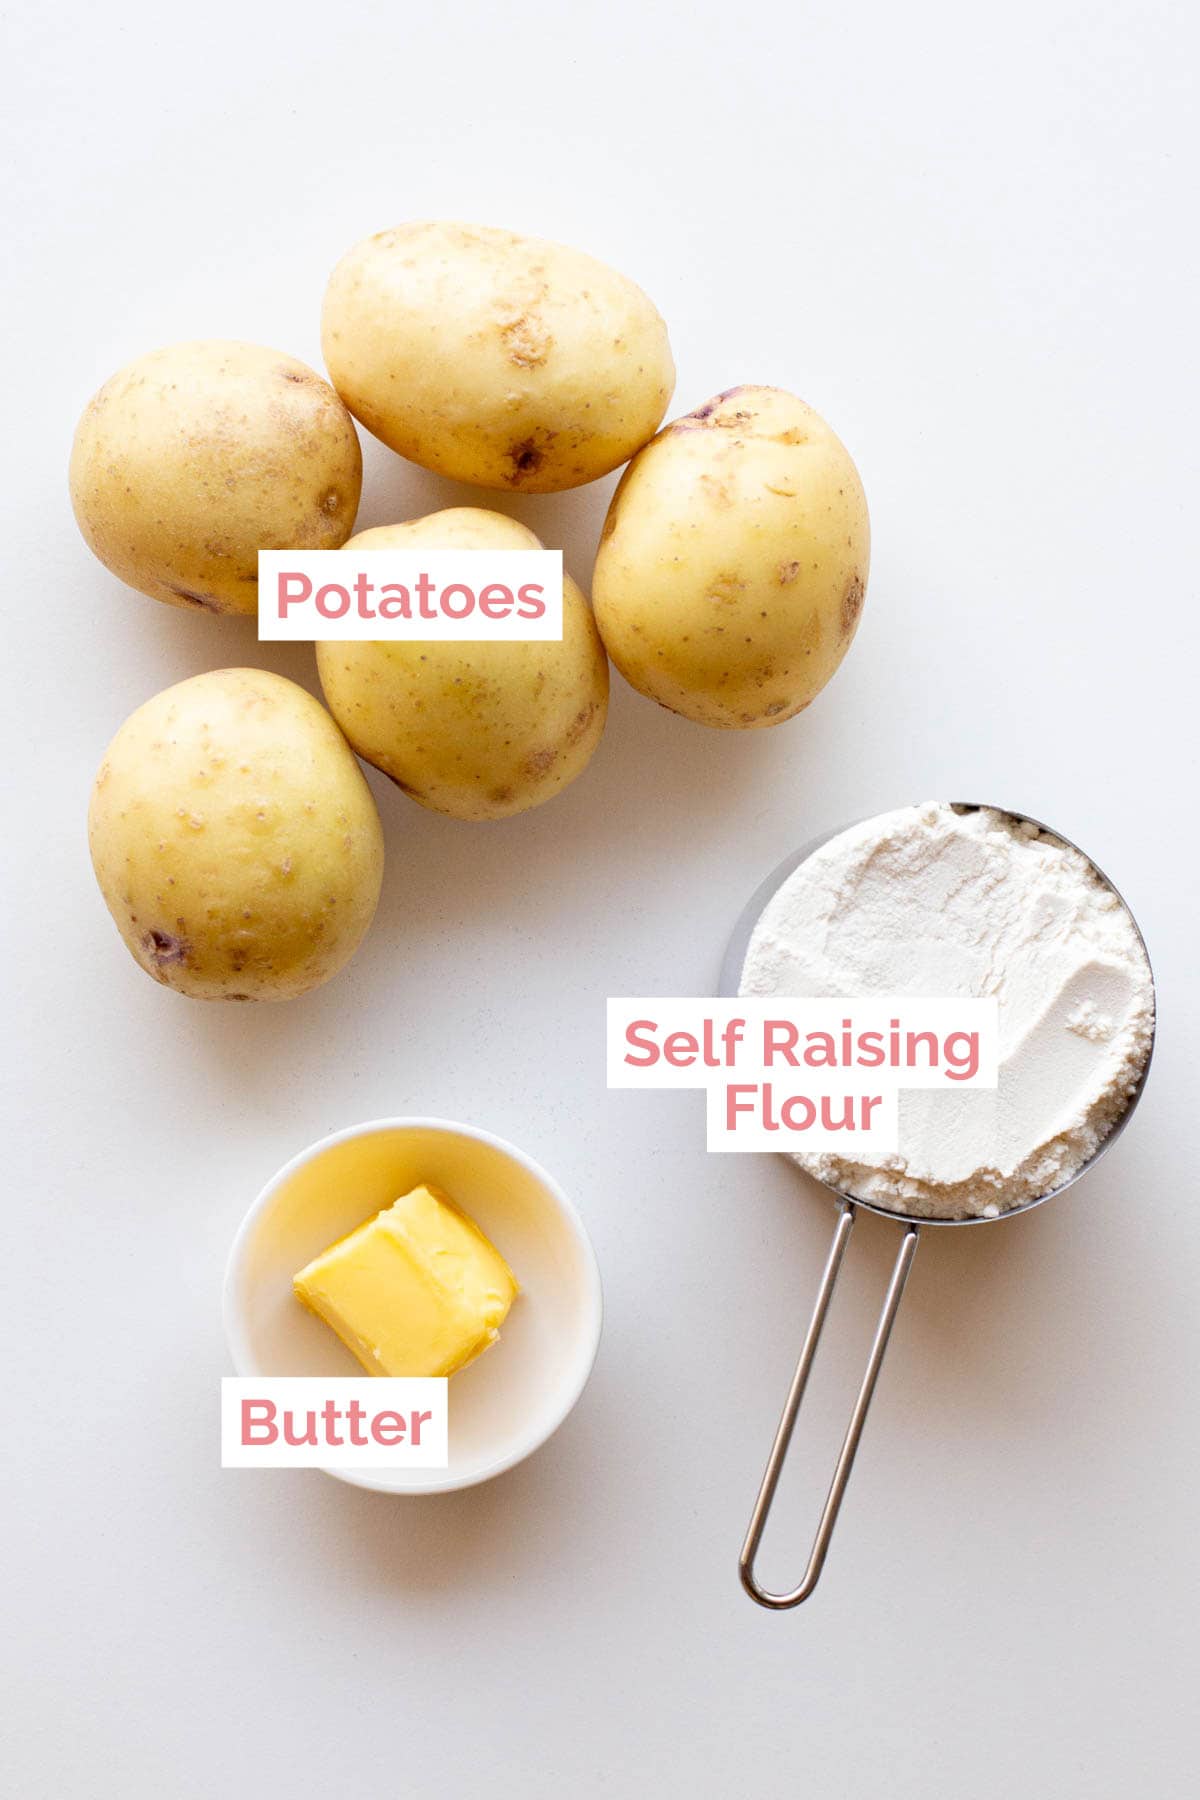 Ingredients laid out to make Scottish potato scones.